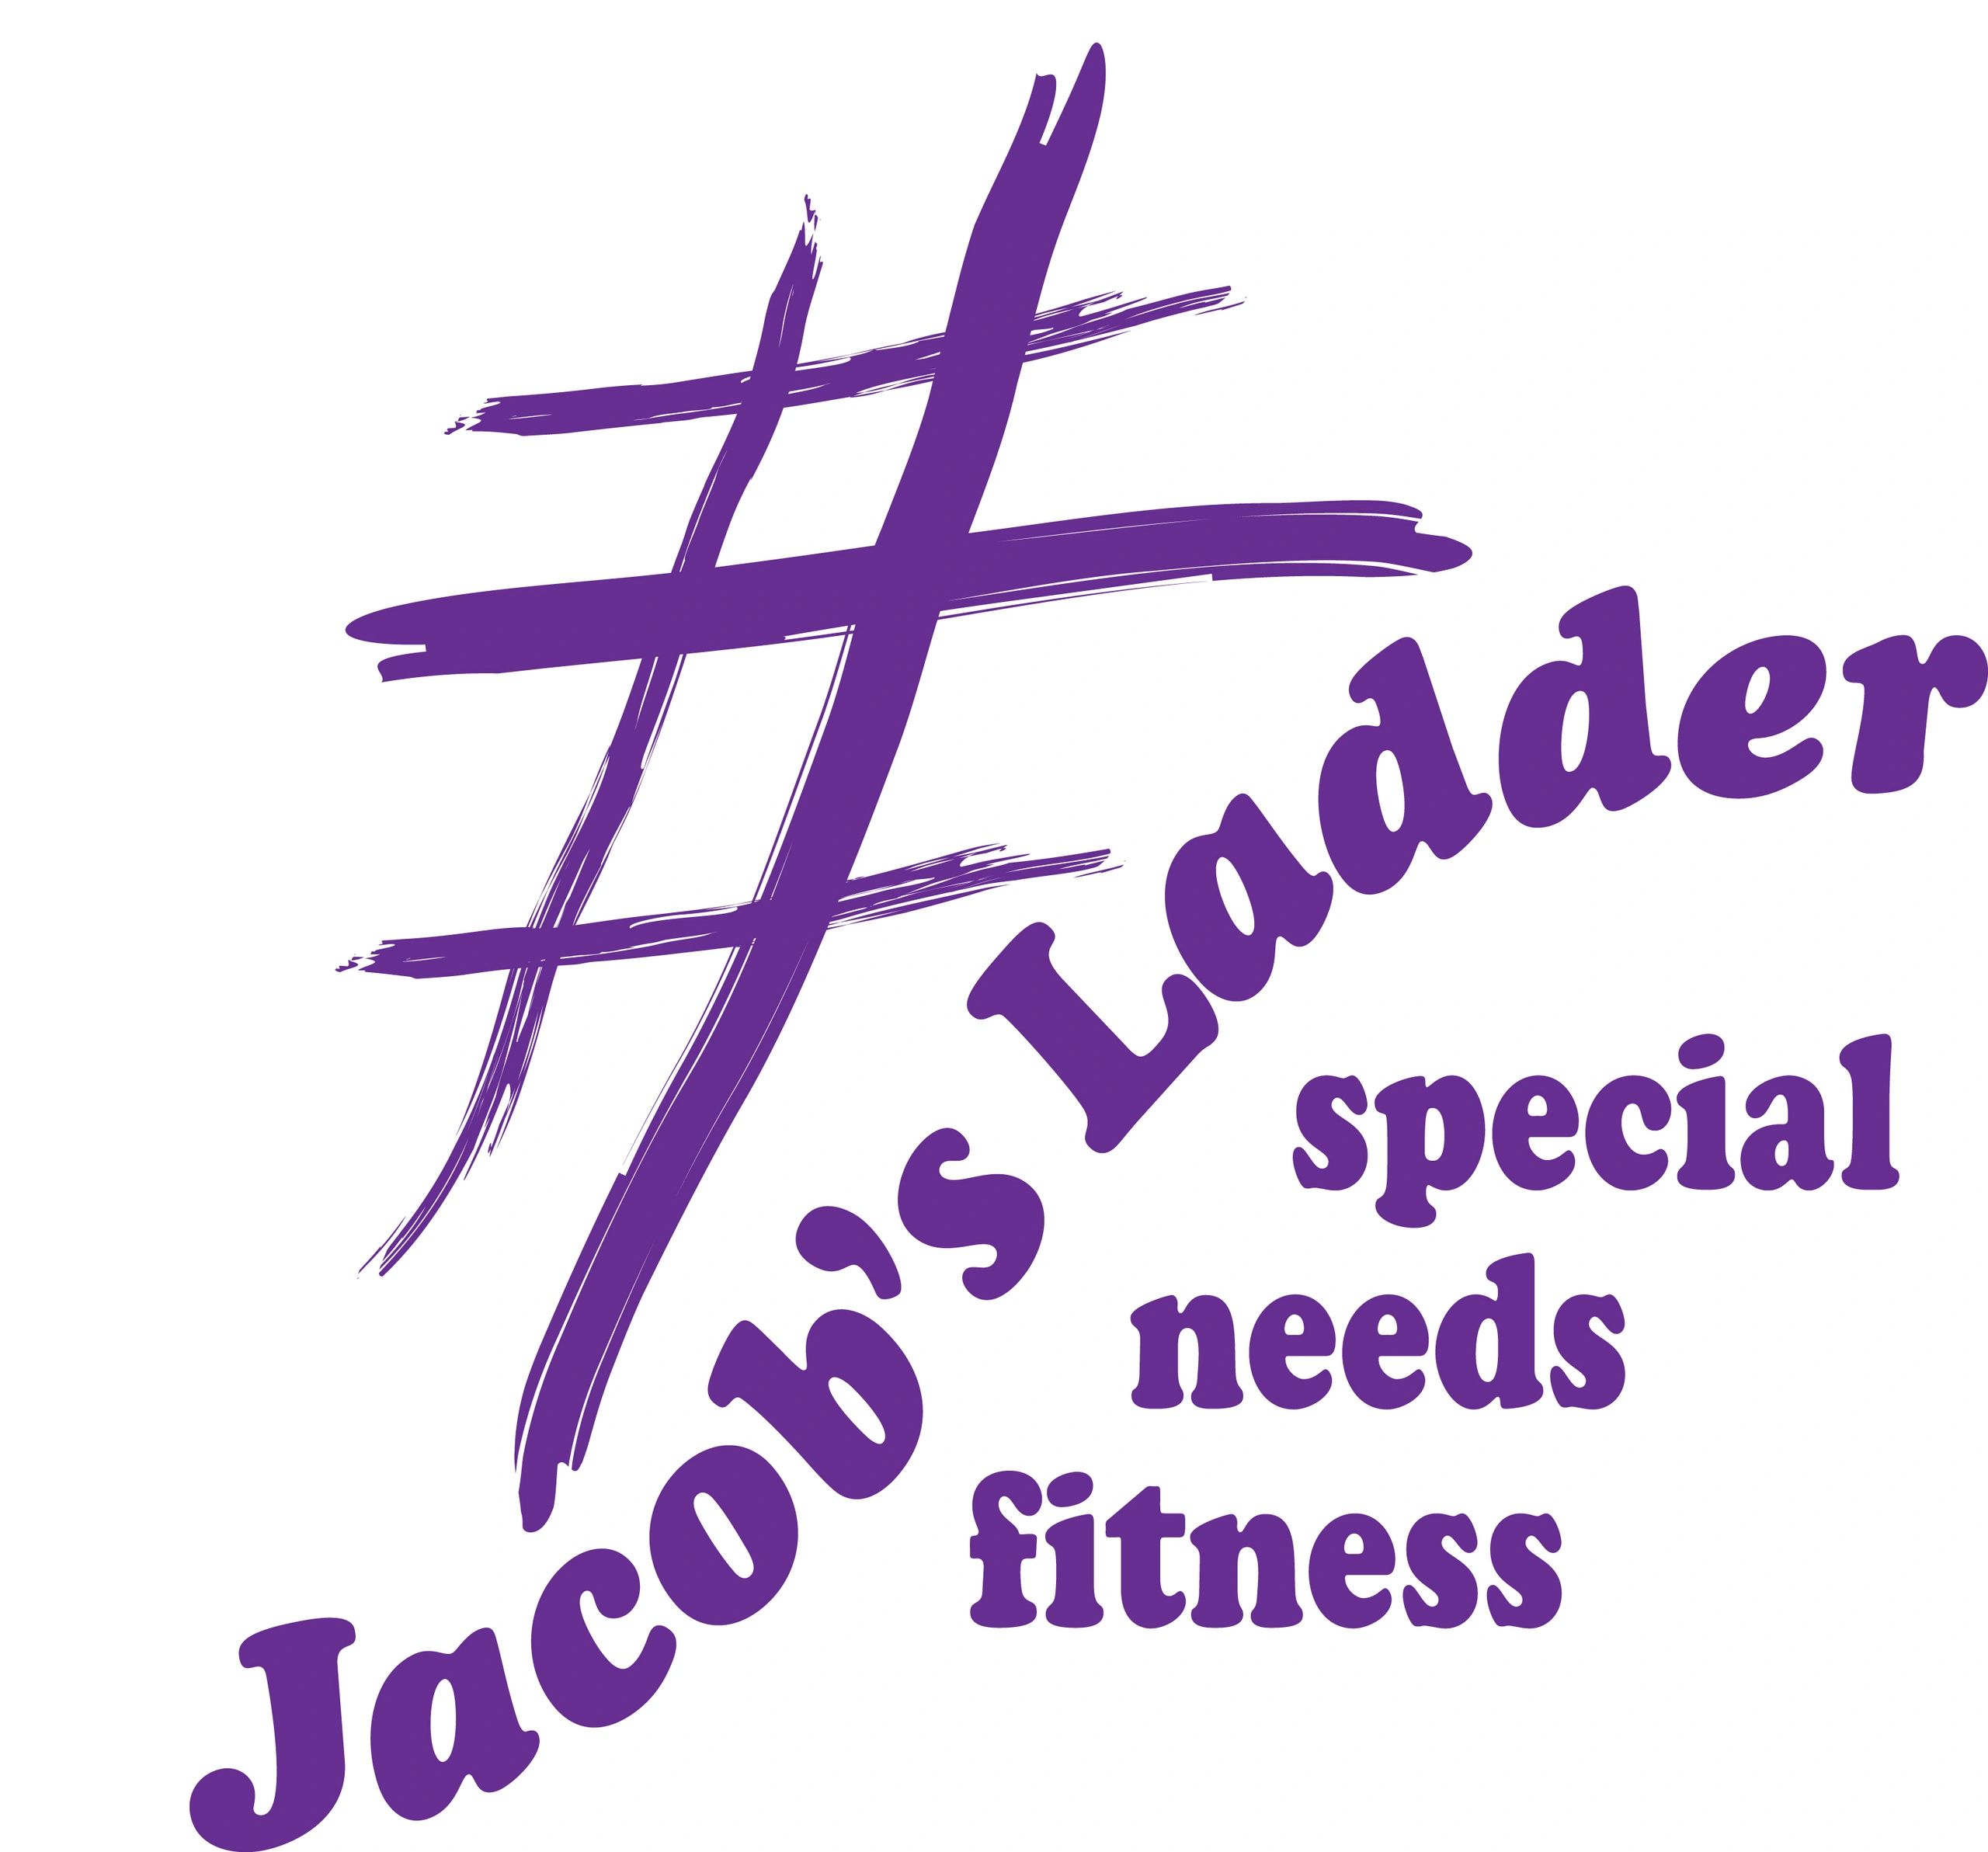 Jacob's Ladder Specail Needs Fitness